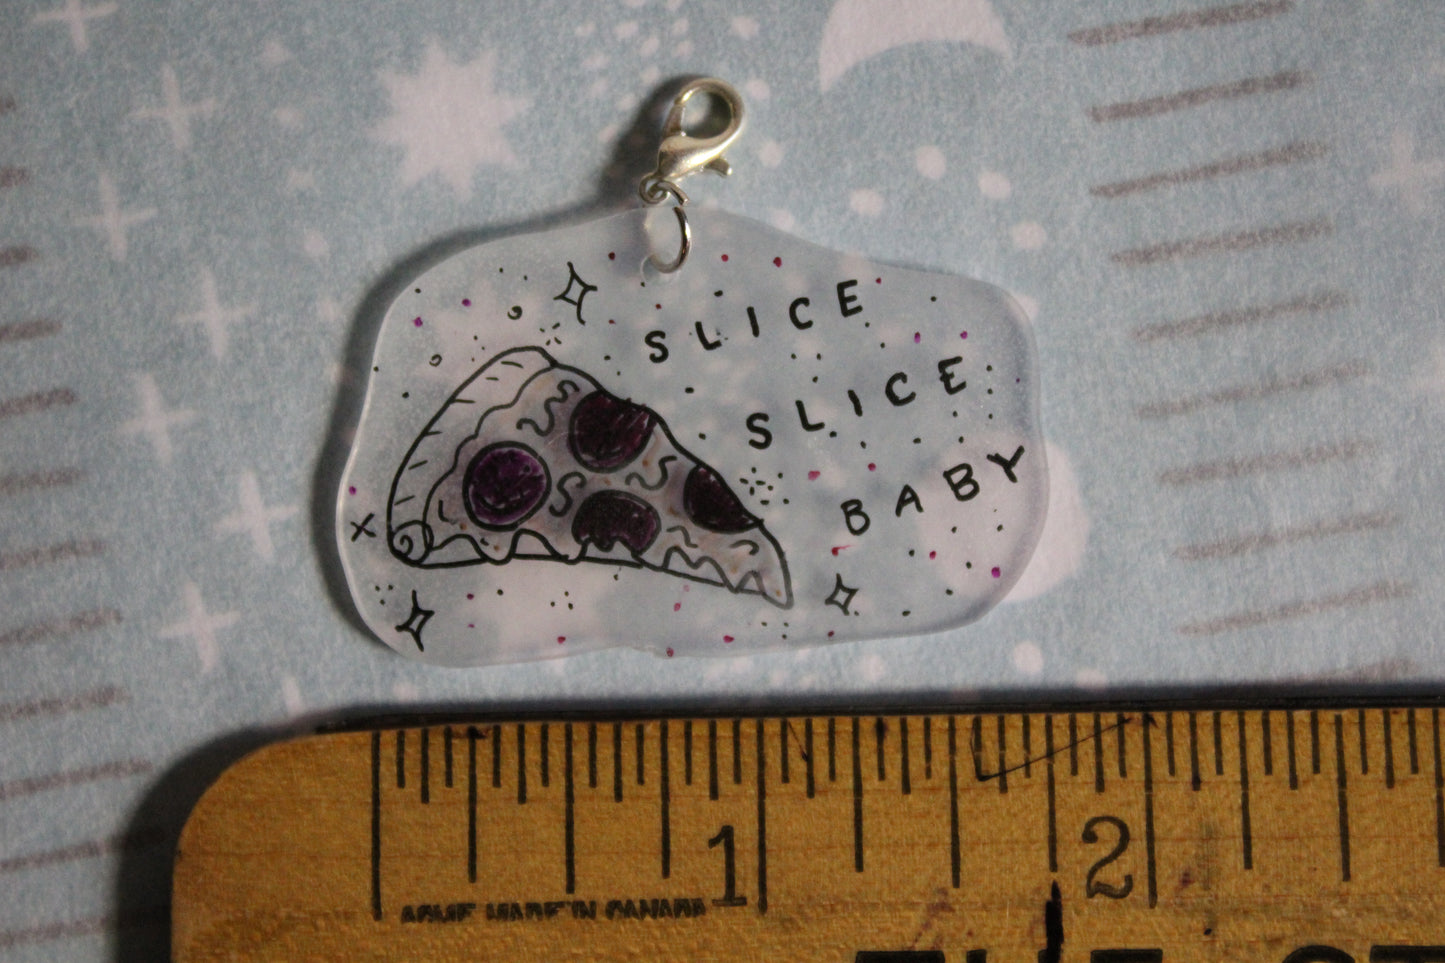 Slice Slice Baby Charm